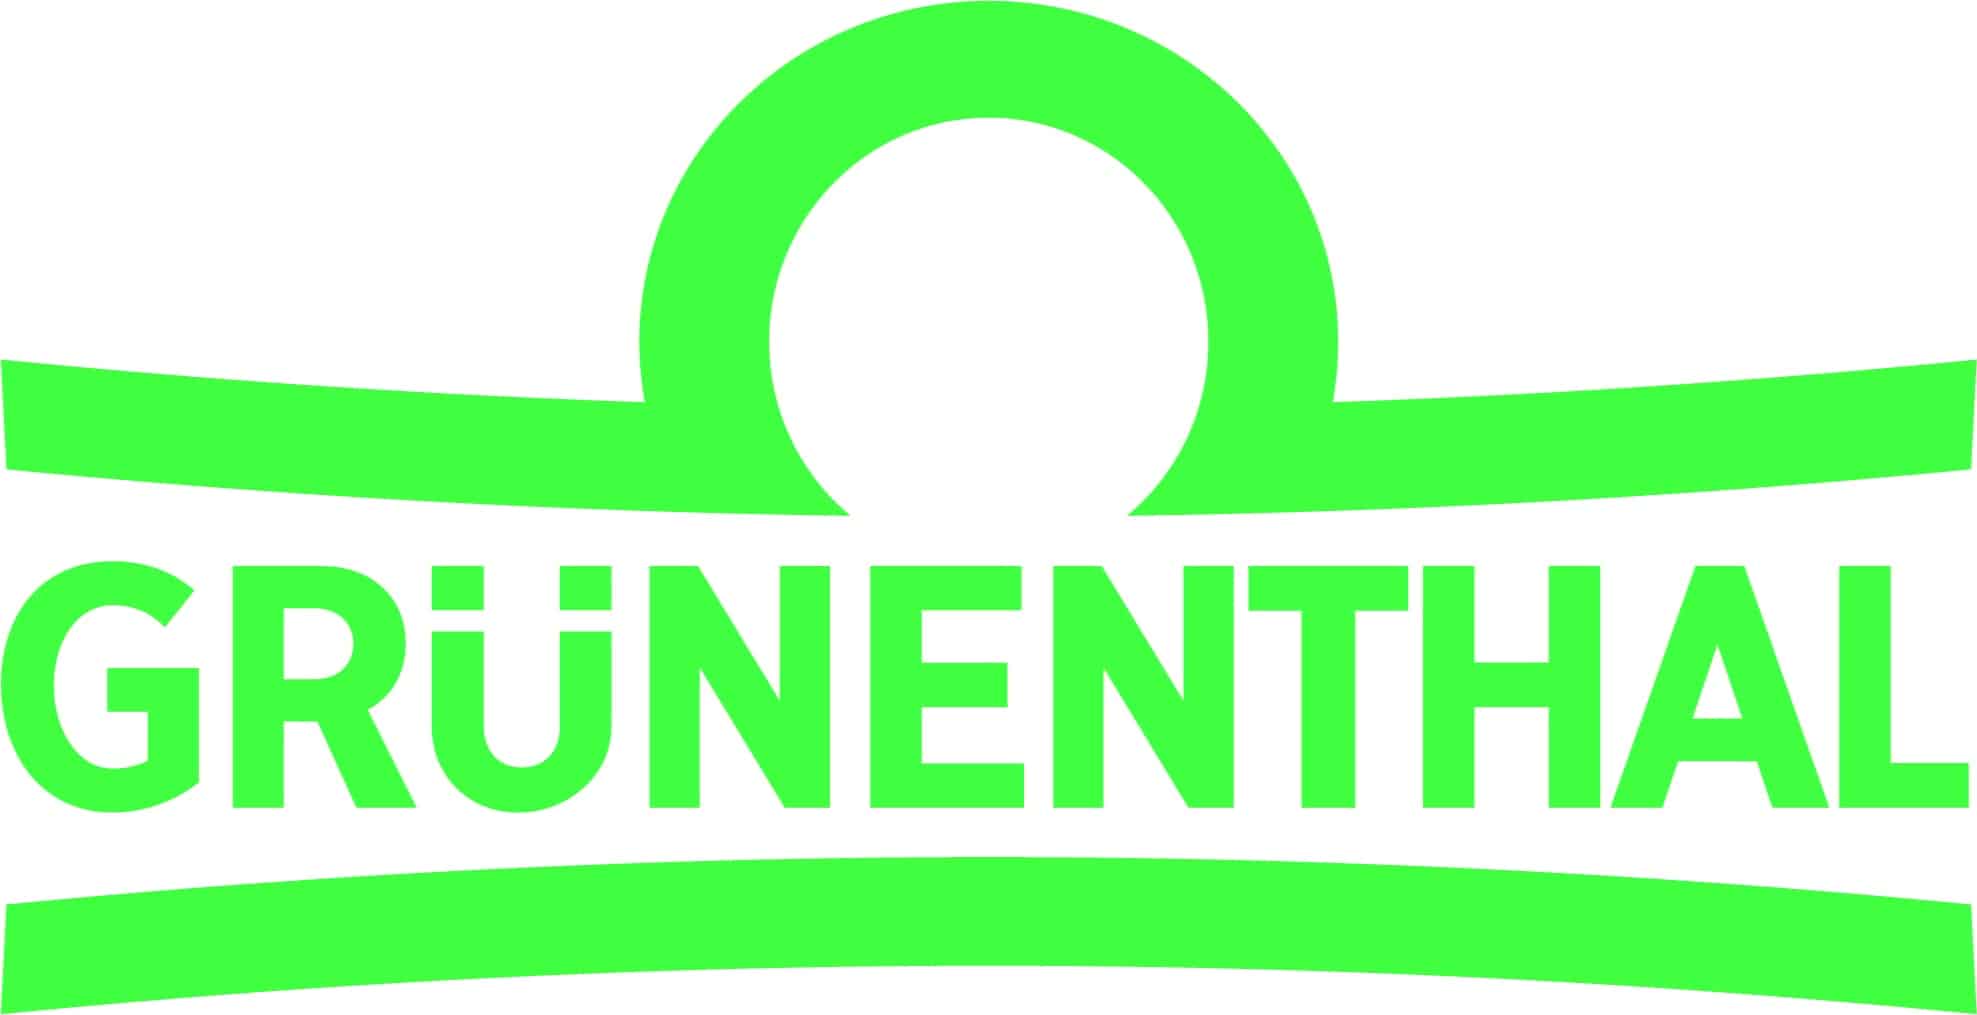 Grünenthal Logo